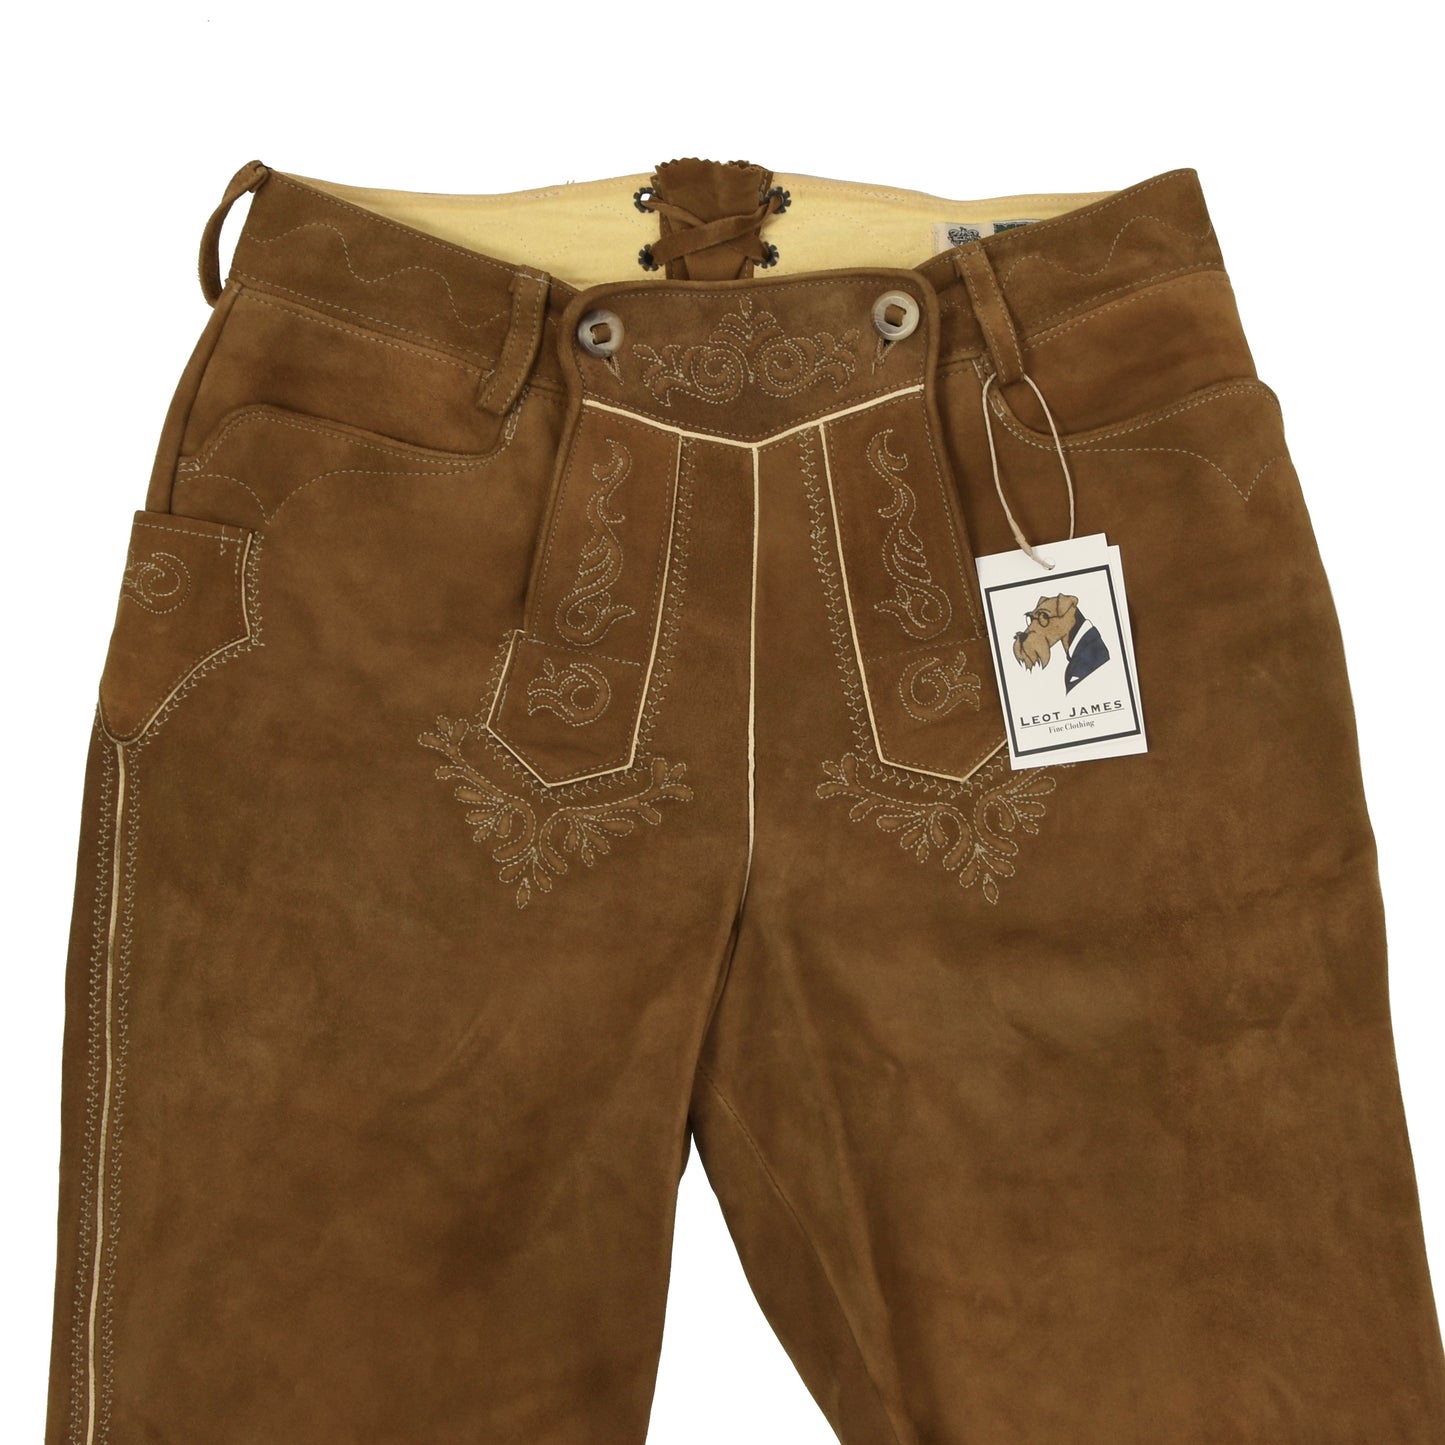 Meindl Classic Knee-Length Lederhosen Size 44 - Brown